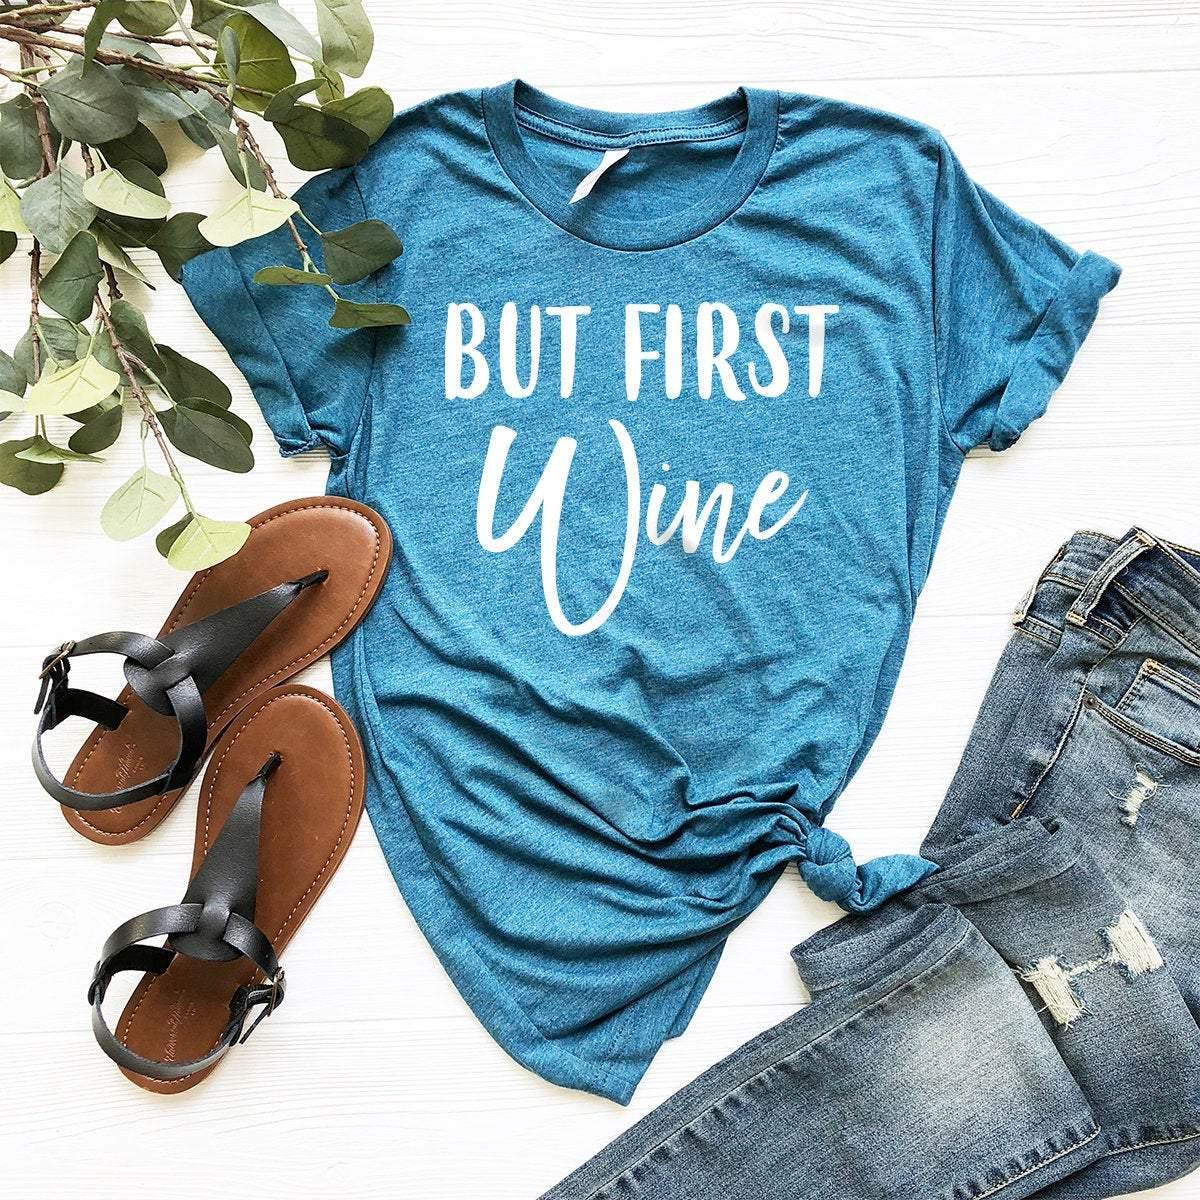 But First Wine Shirt, Wine T-Shirt, Wine Lover Gift, Funny Wine Shirt, Wine Drinking Shirt, Wine Lover Tee, Wine Gift, Wine Shirt, Wine Tee - Fastdeliverytees.com